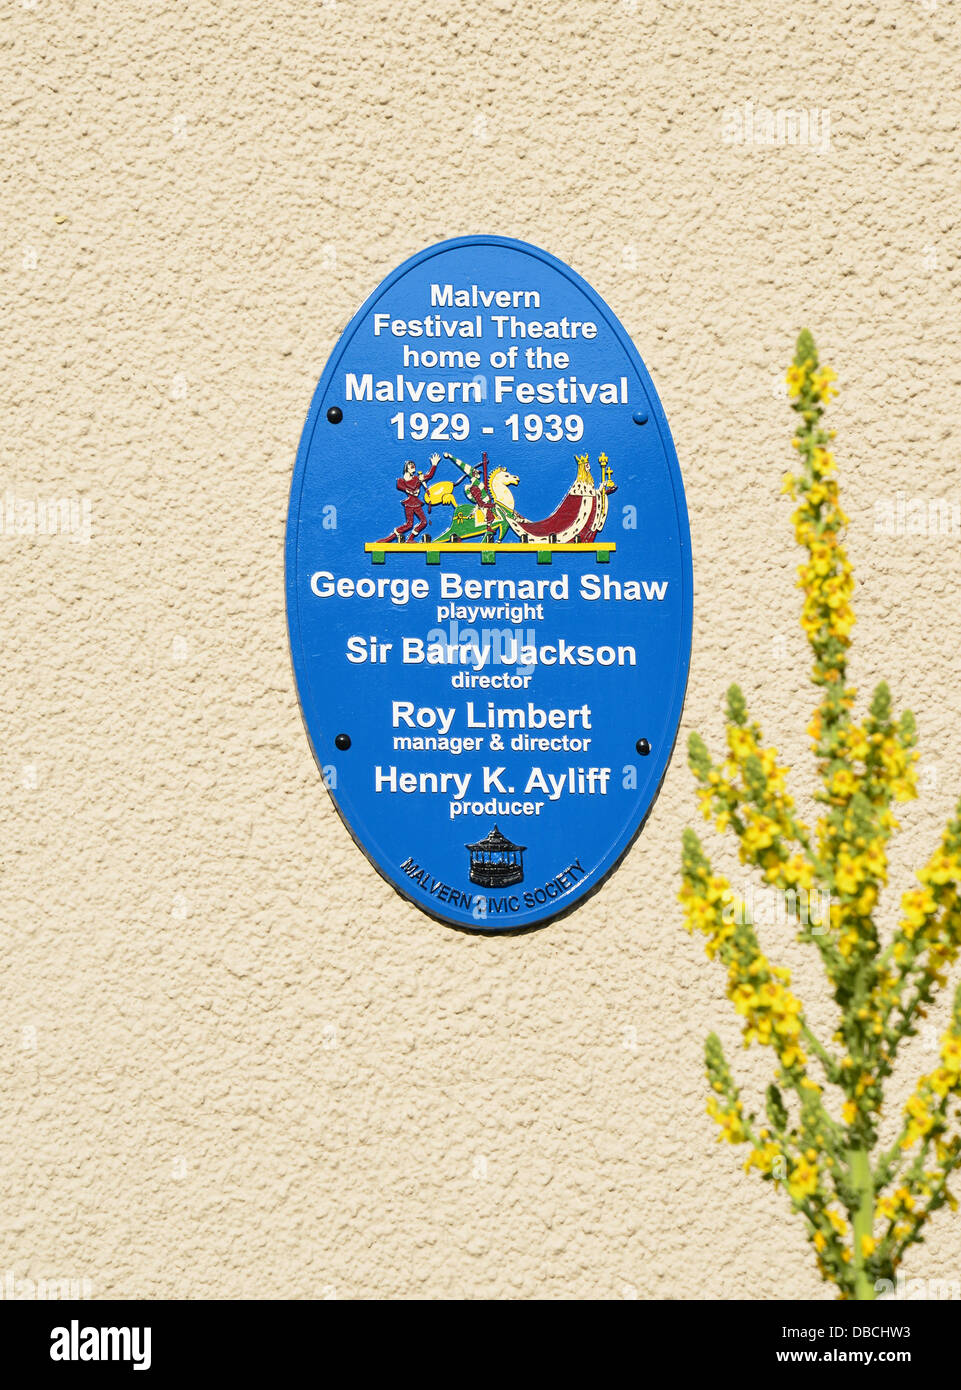 George Bernard Shaw Malvern Festival Theatre plaque, Grange Rd, Great Malvern, Worcestershire, England, United Kingdom Stock Photo